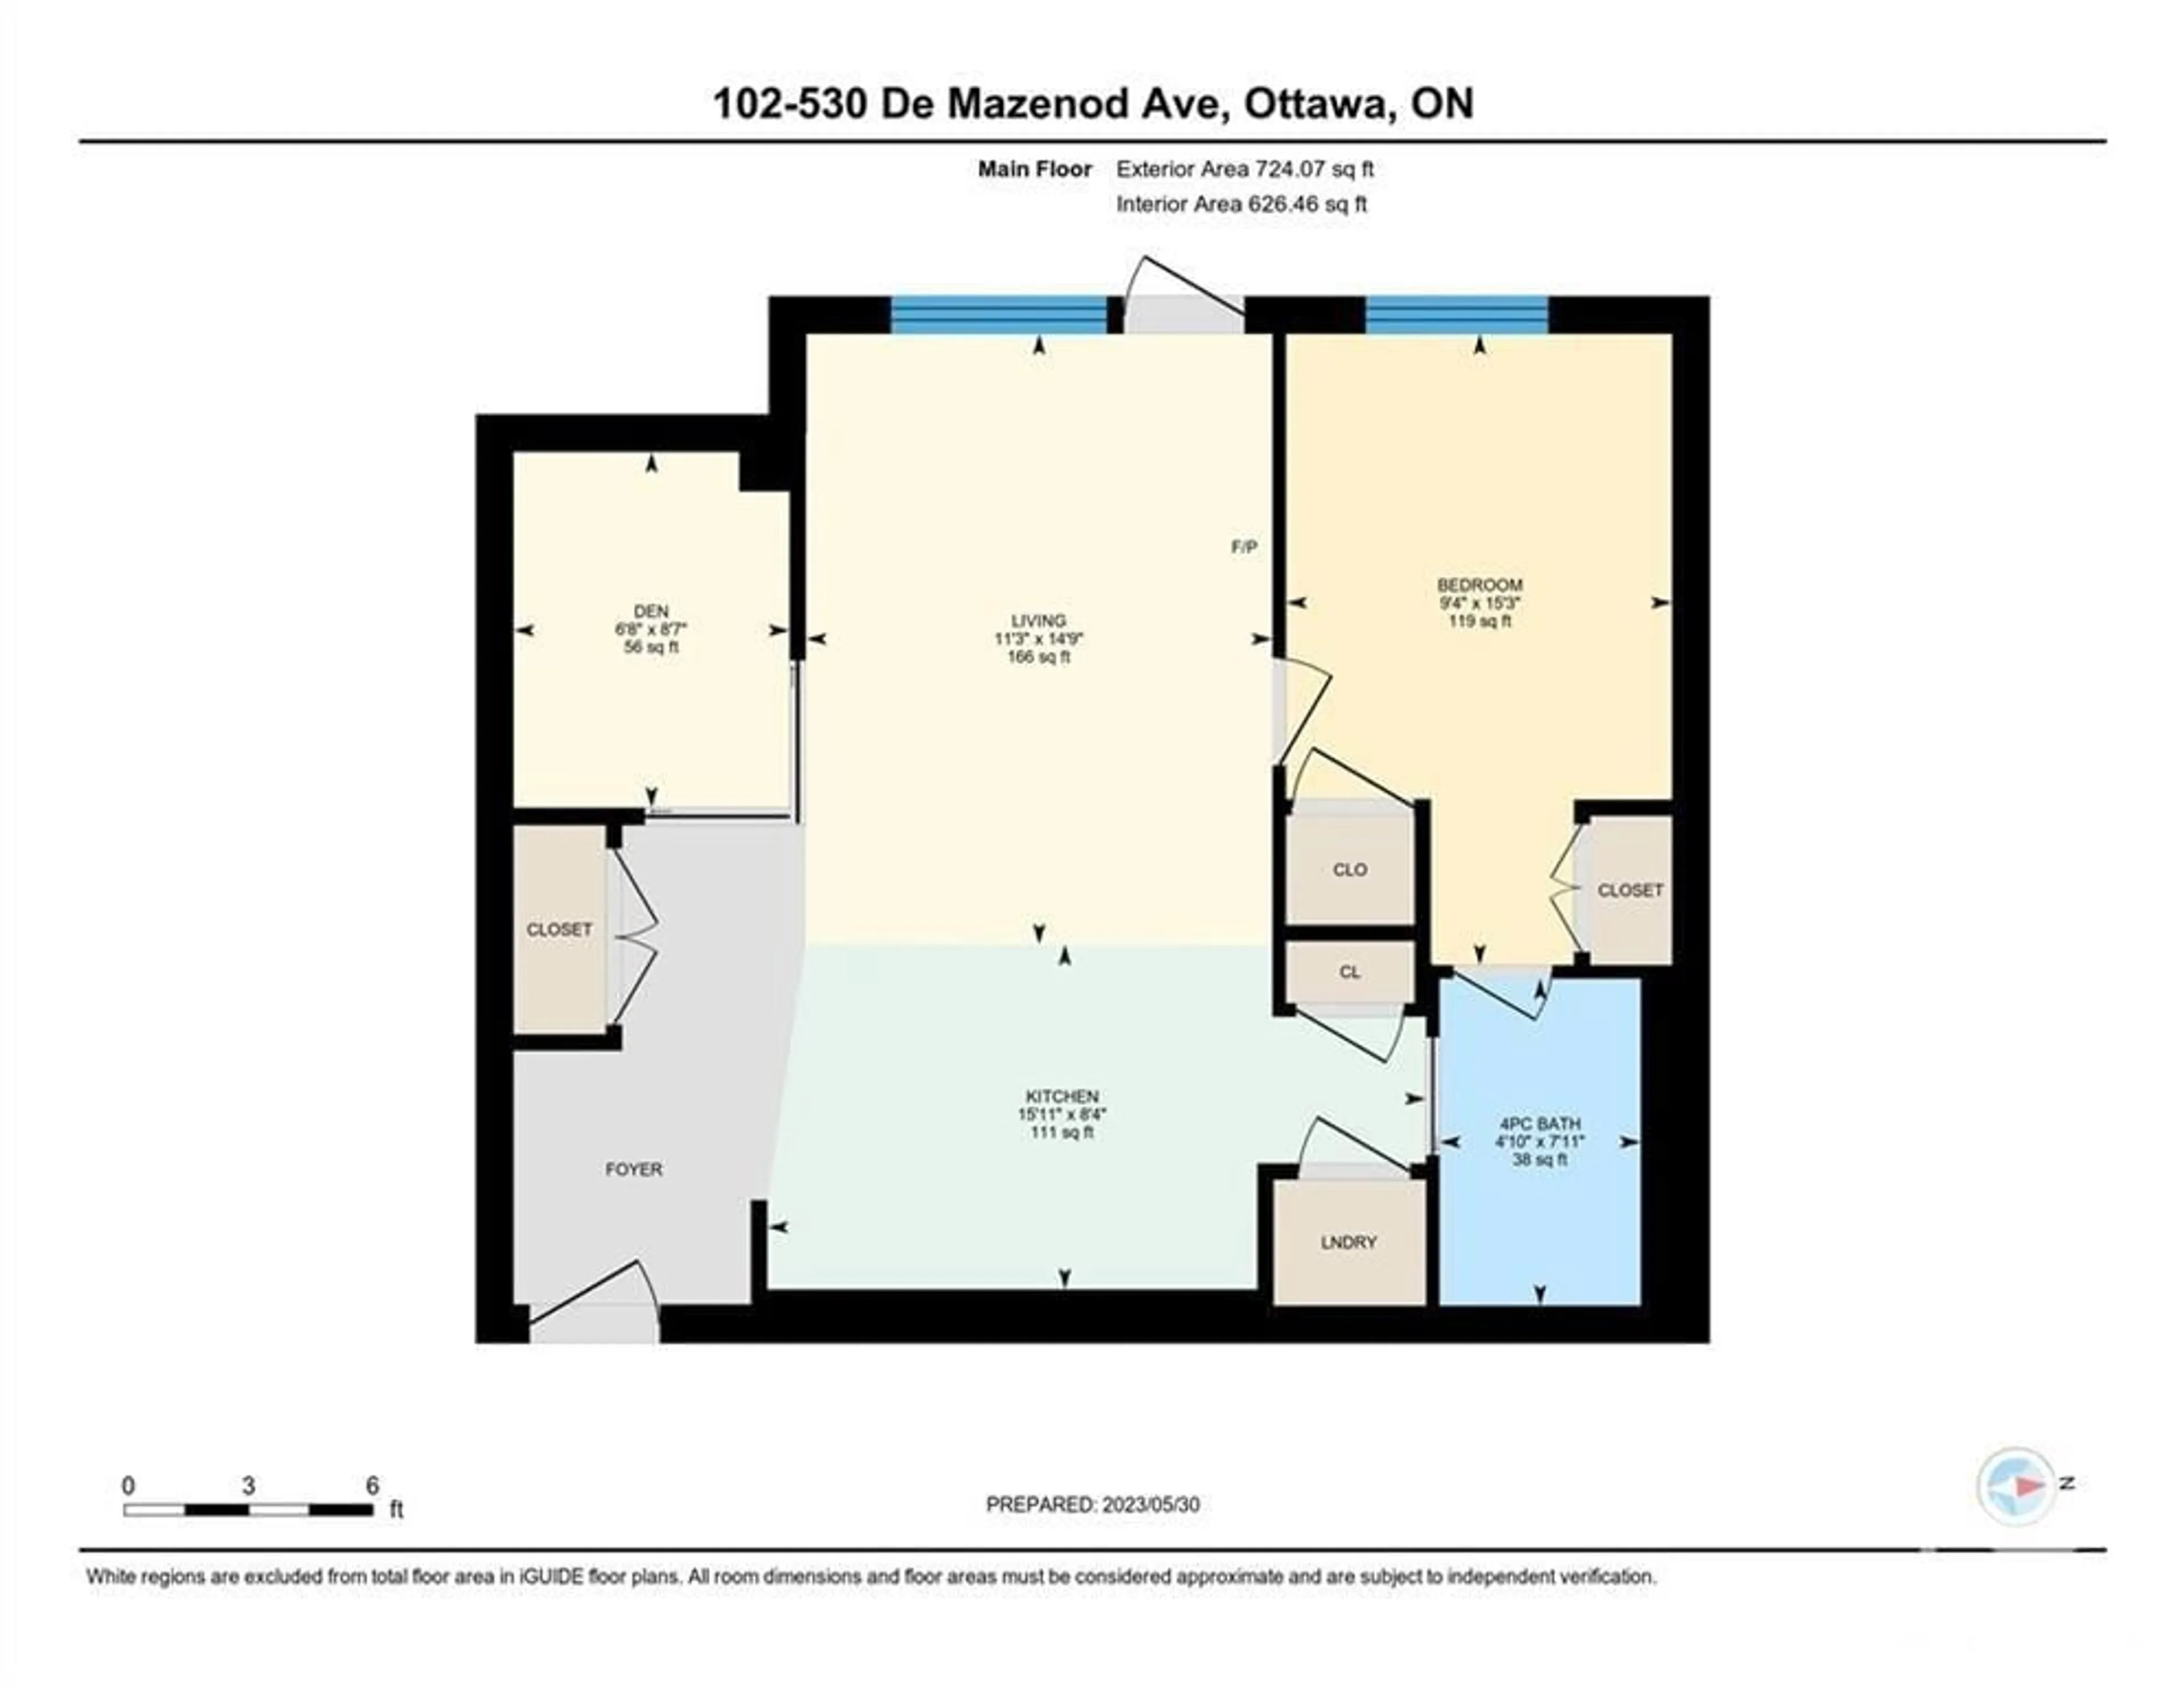 Floor plan for 530 DE MAZENOD Ave #102, Ottawa Ontario K1S 5W8